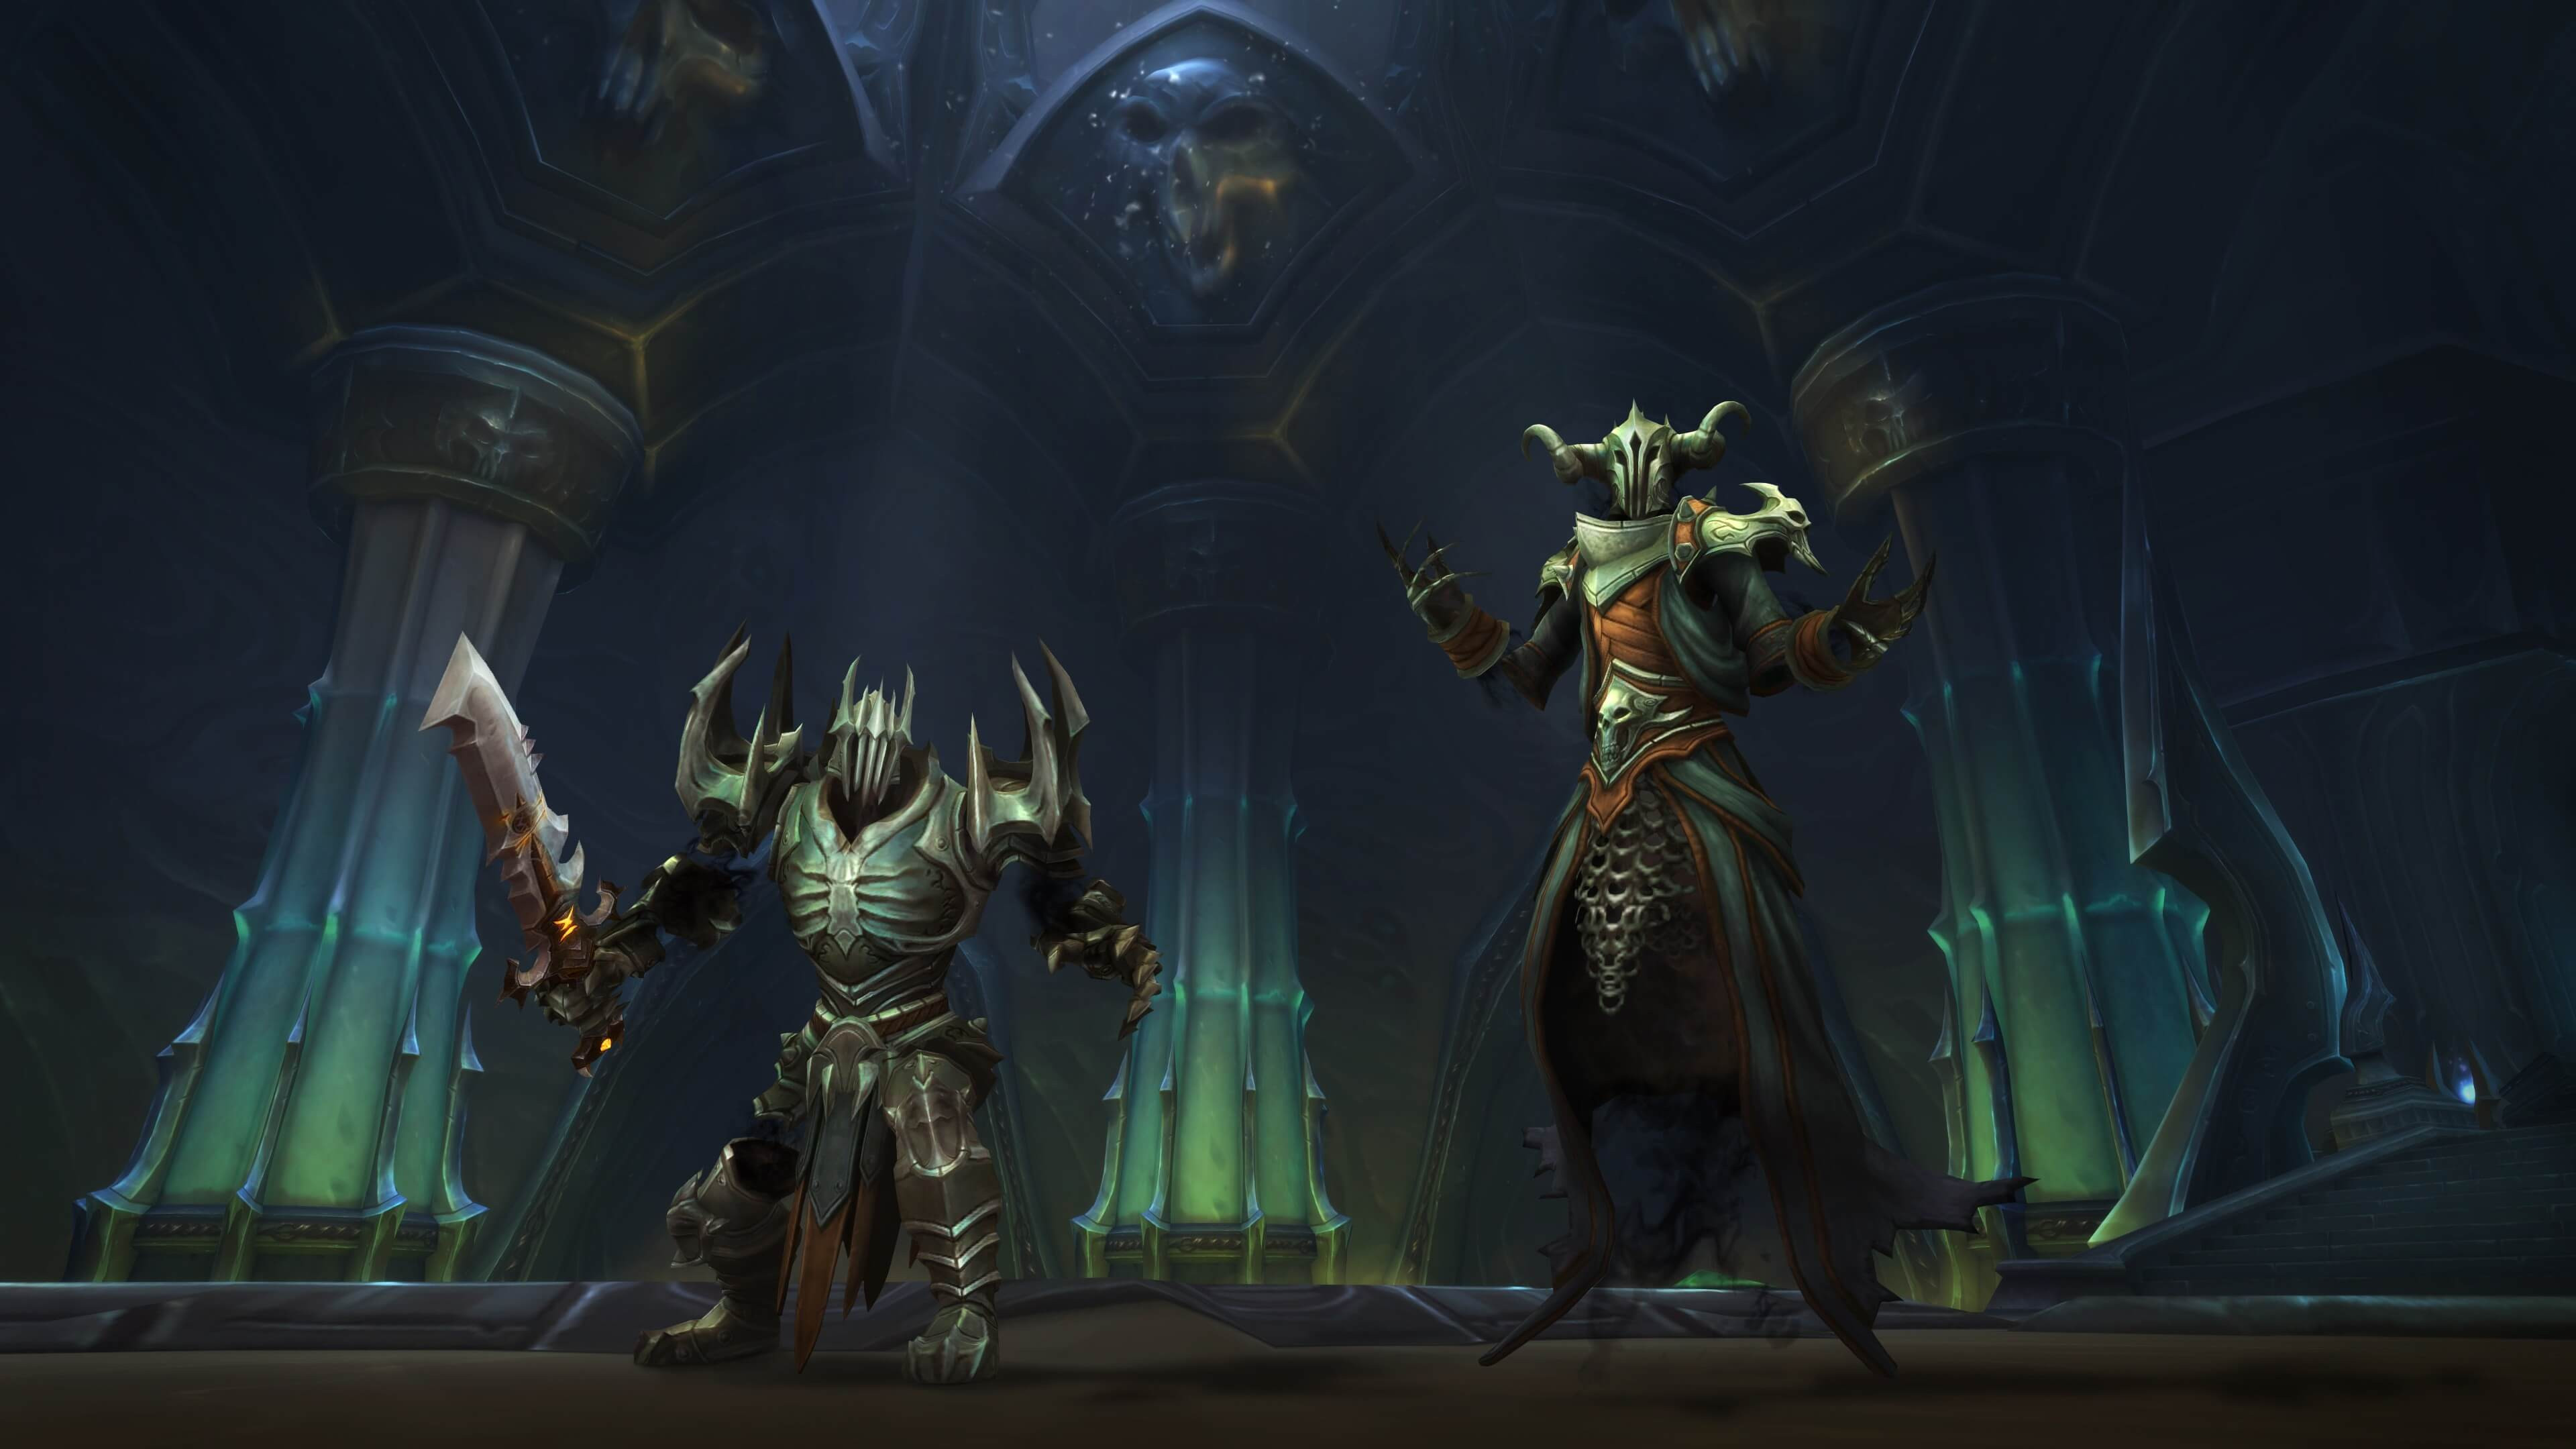 Download wallpaper: World of Warcraft: Shadowlands 3840x2160